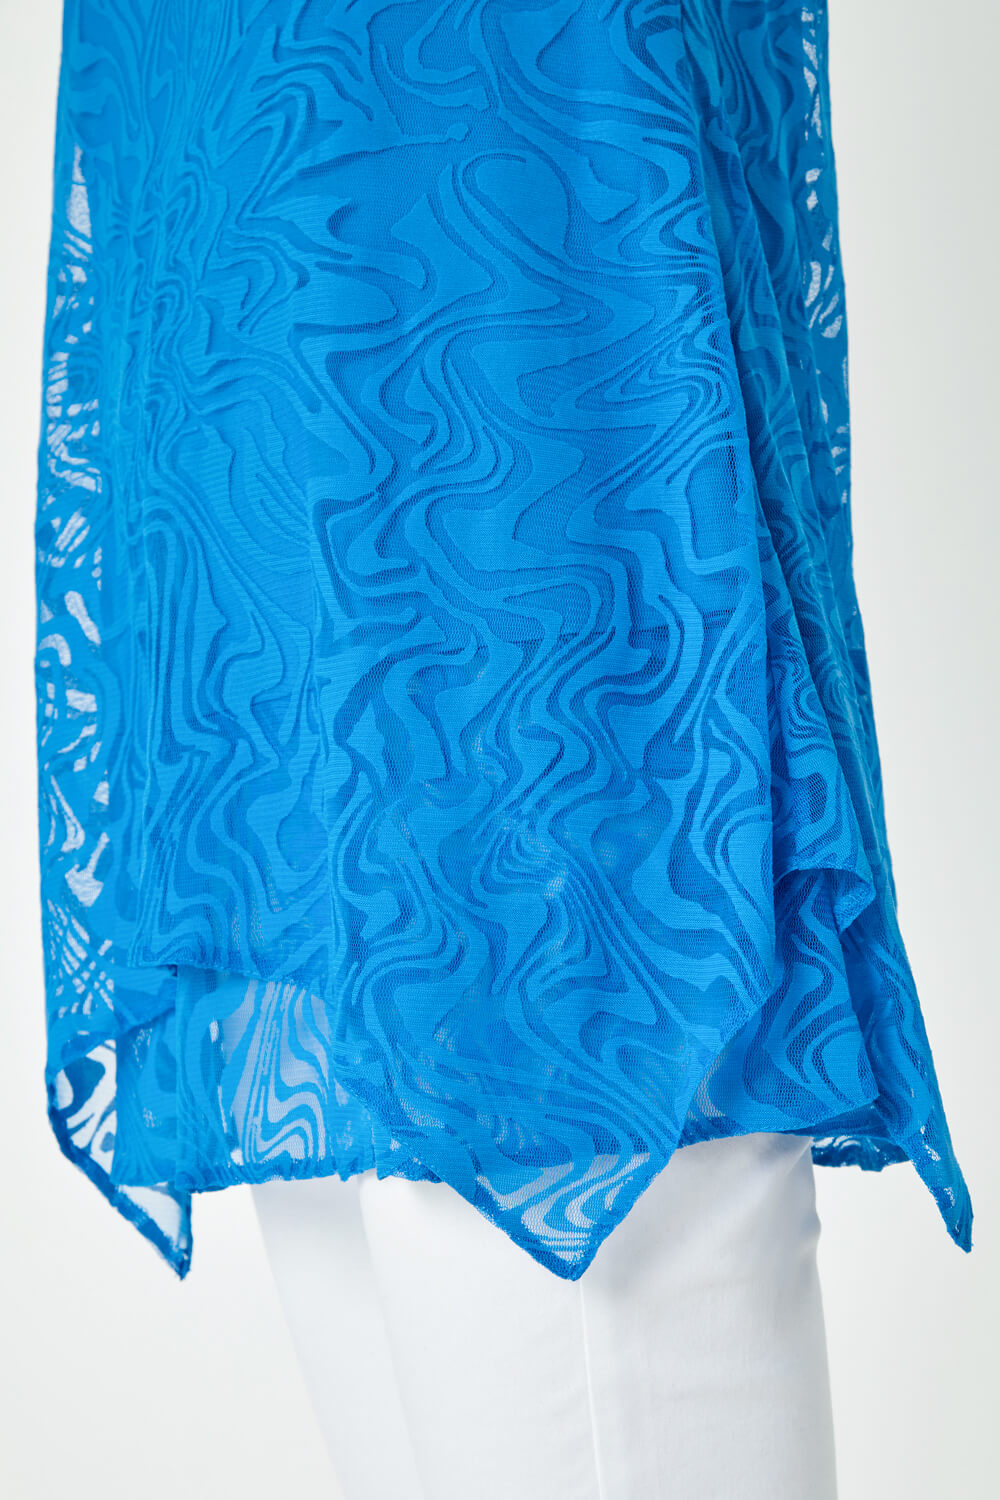 Blue Sleeveless Textured Swirl Print Top, Image 5 of 5